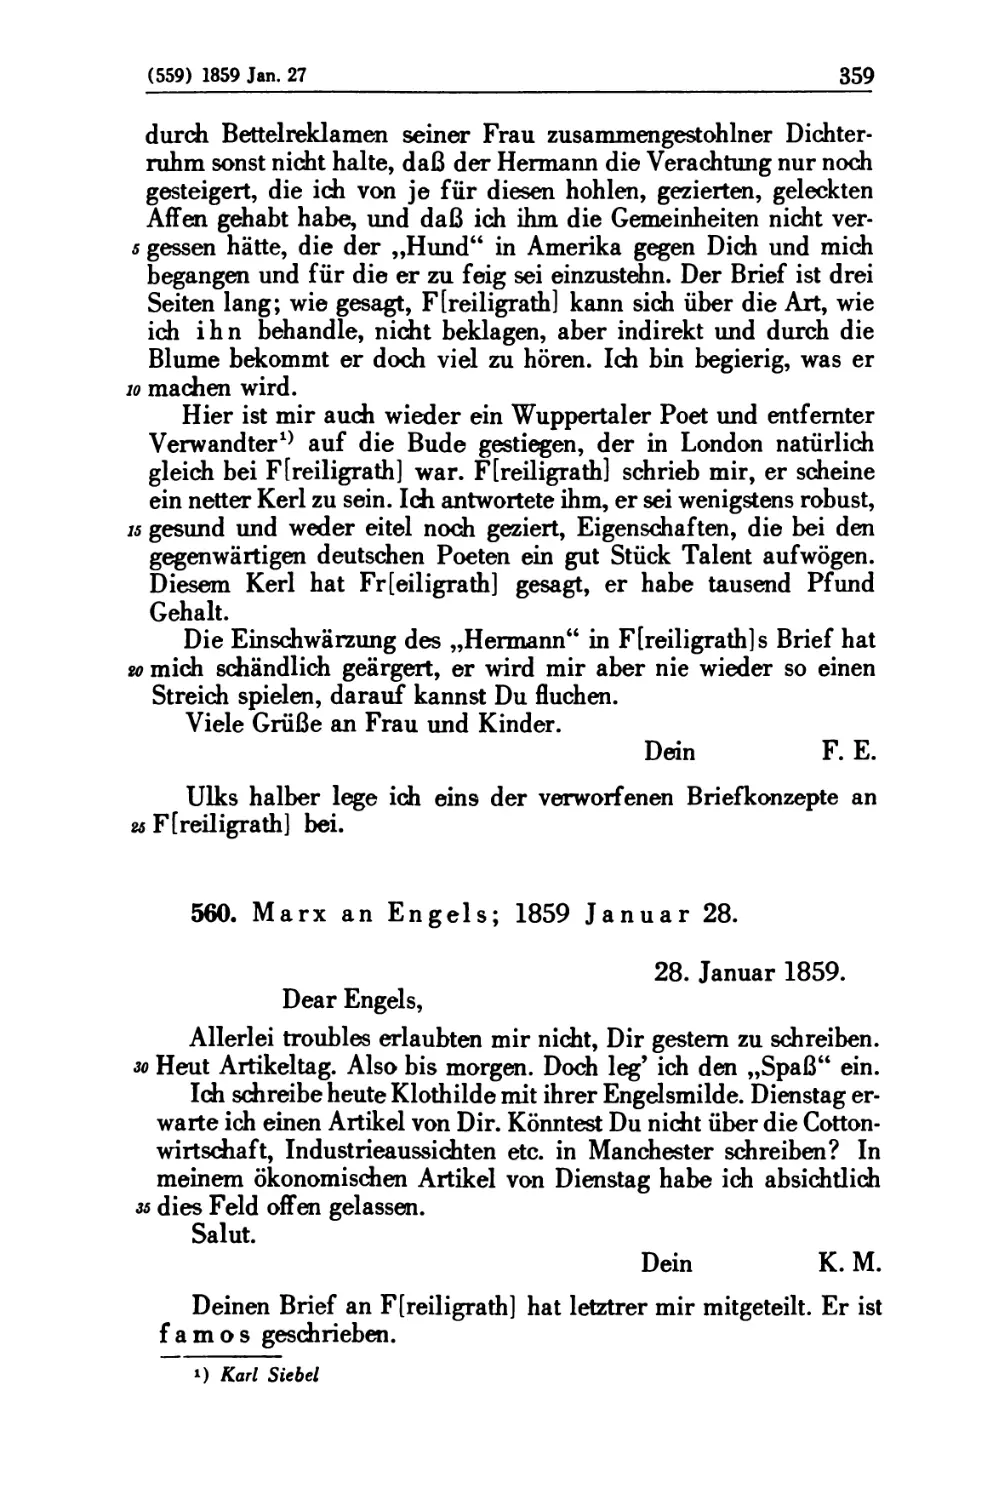 560. Marx an Engels; 1859 Januar 28